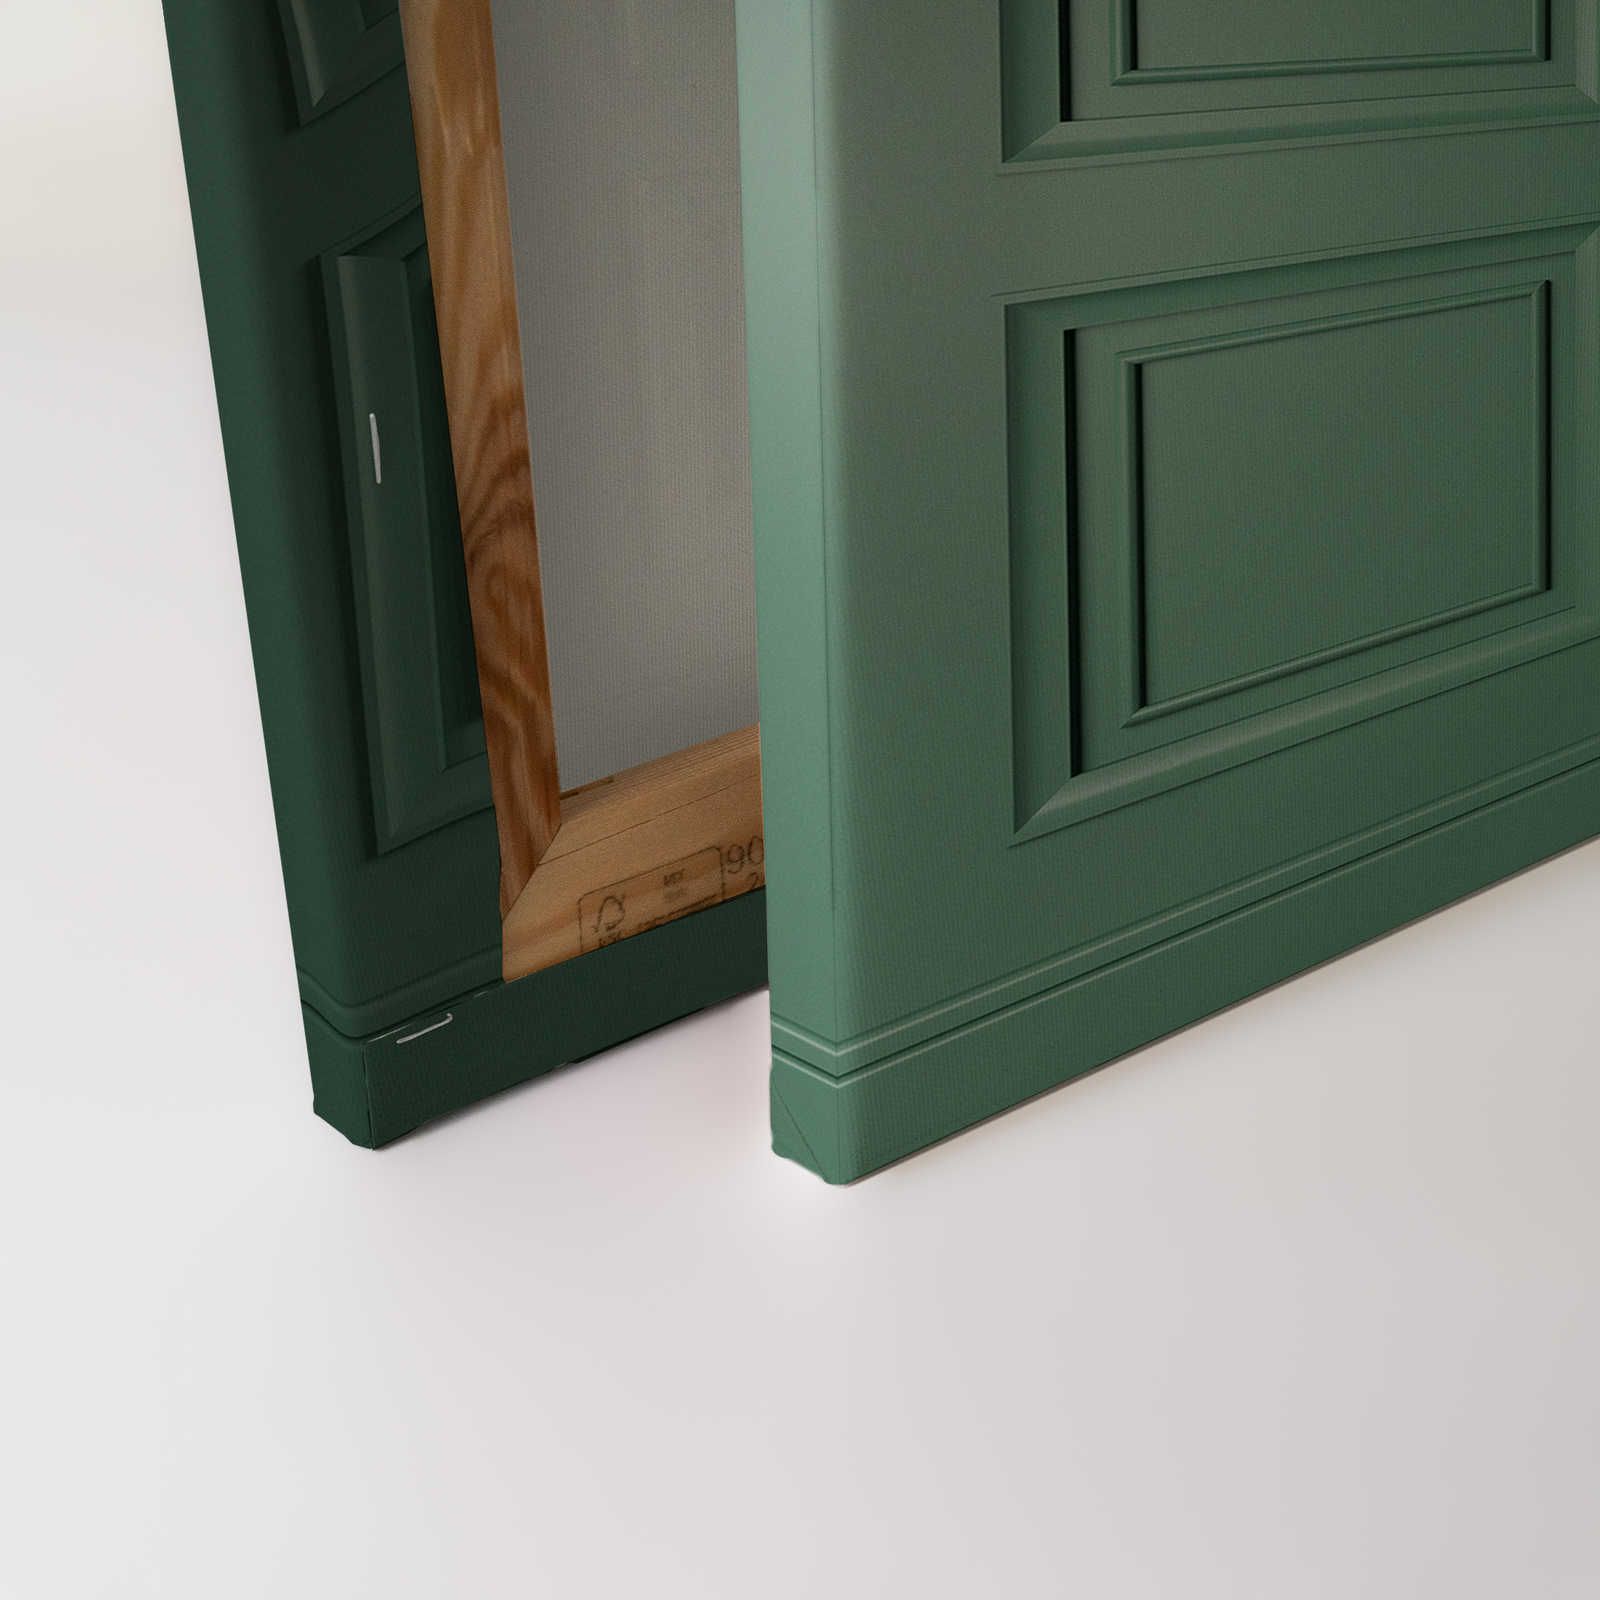             Kensington 1 - 3D Canvas painting wood panelling fir green - 0.90 m x 0.60 m
        